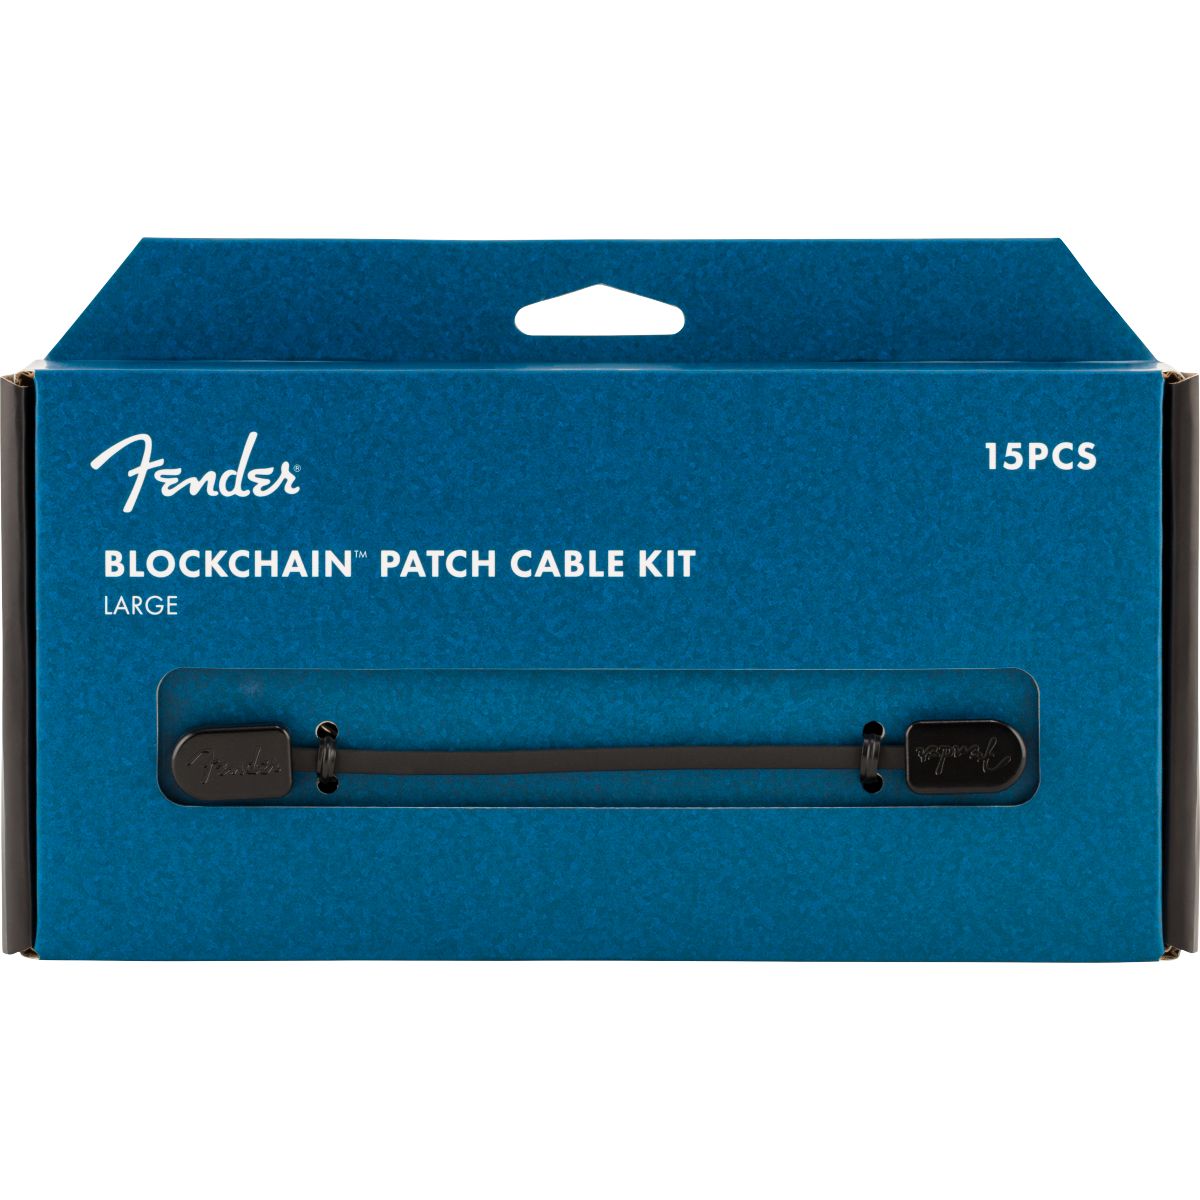 Fender Blockchain Patch Cable Kit